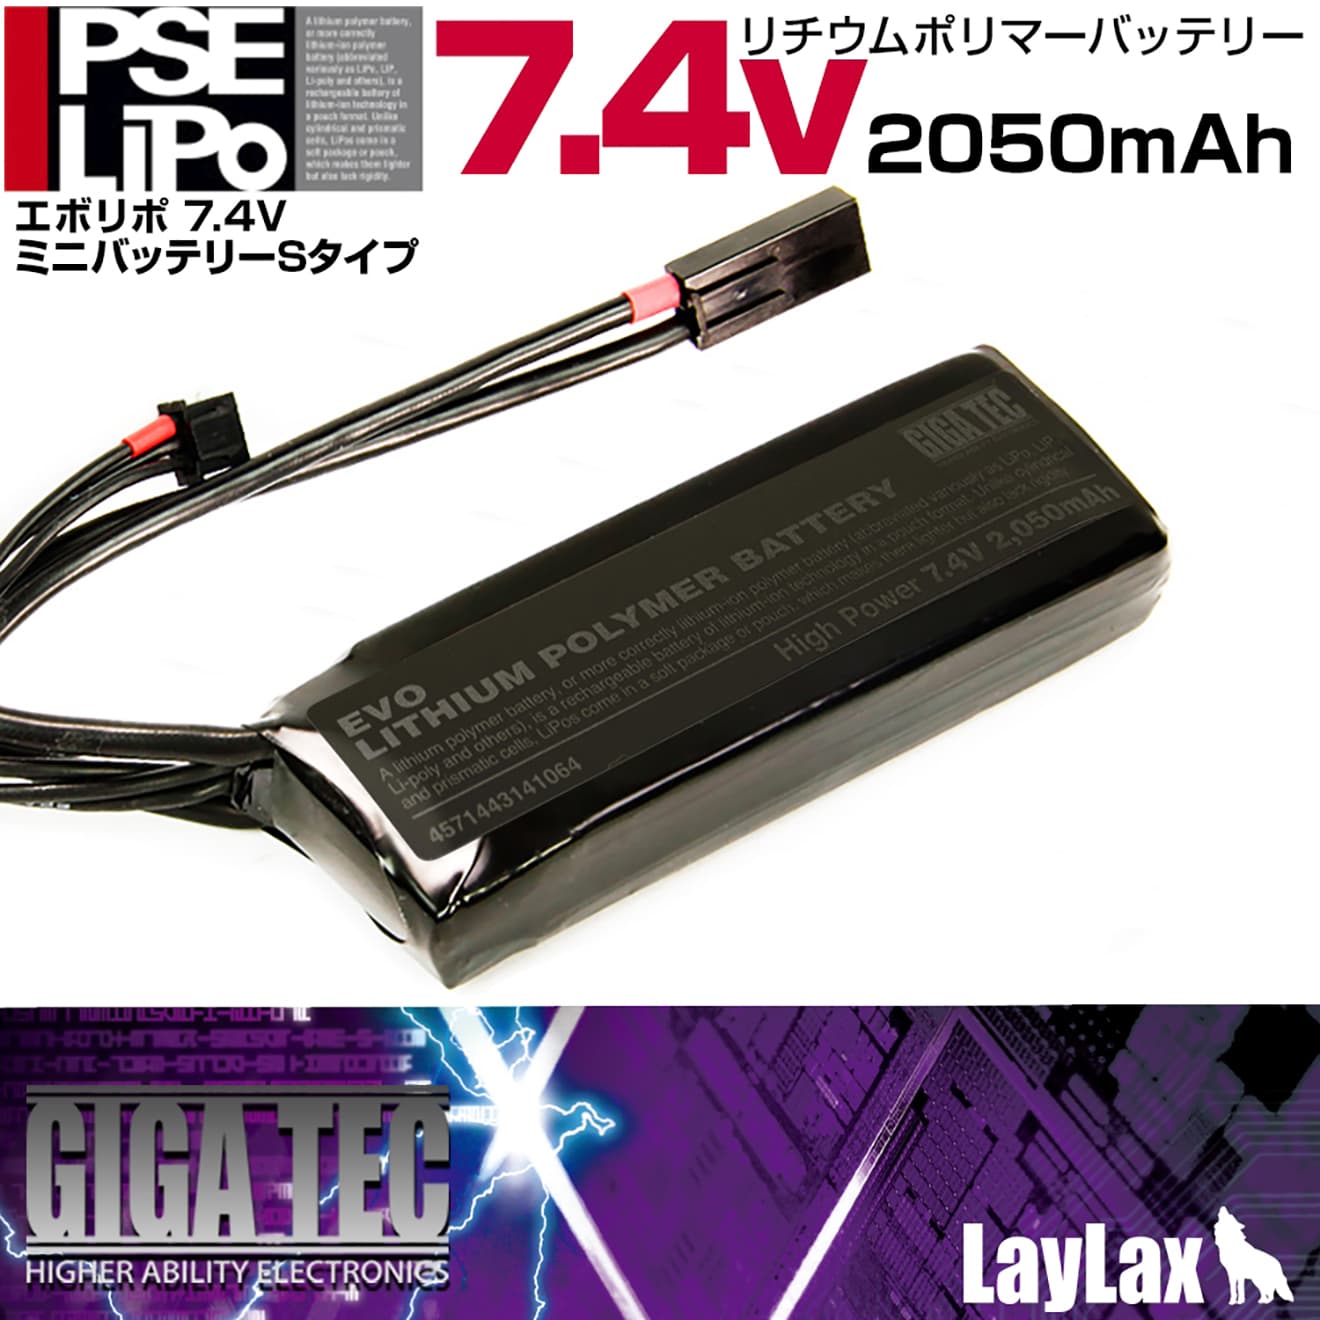 LayLax GIGA TEC PSEリポバッテリーR 7.4V 2050mAh ミニバッテリーS